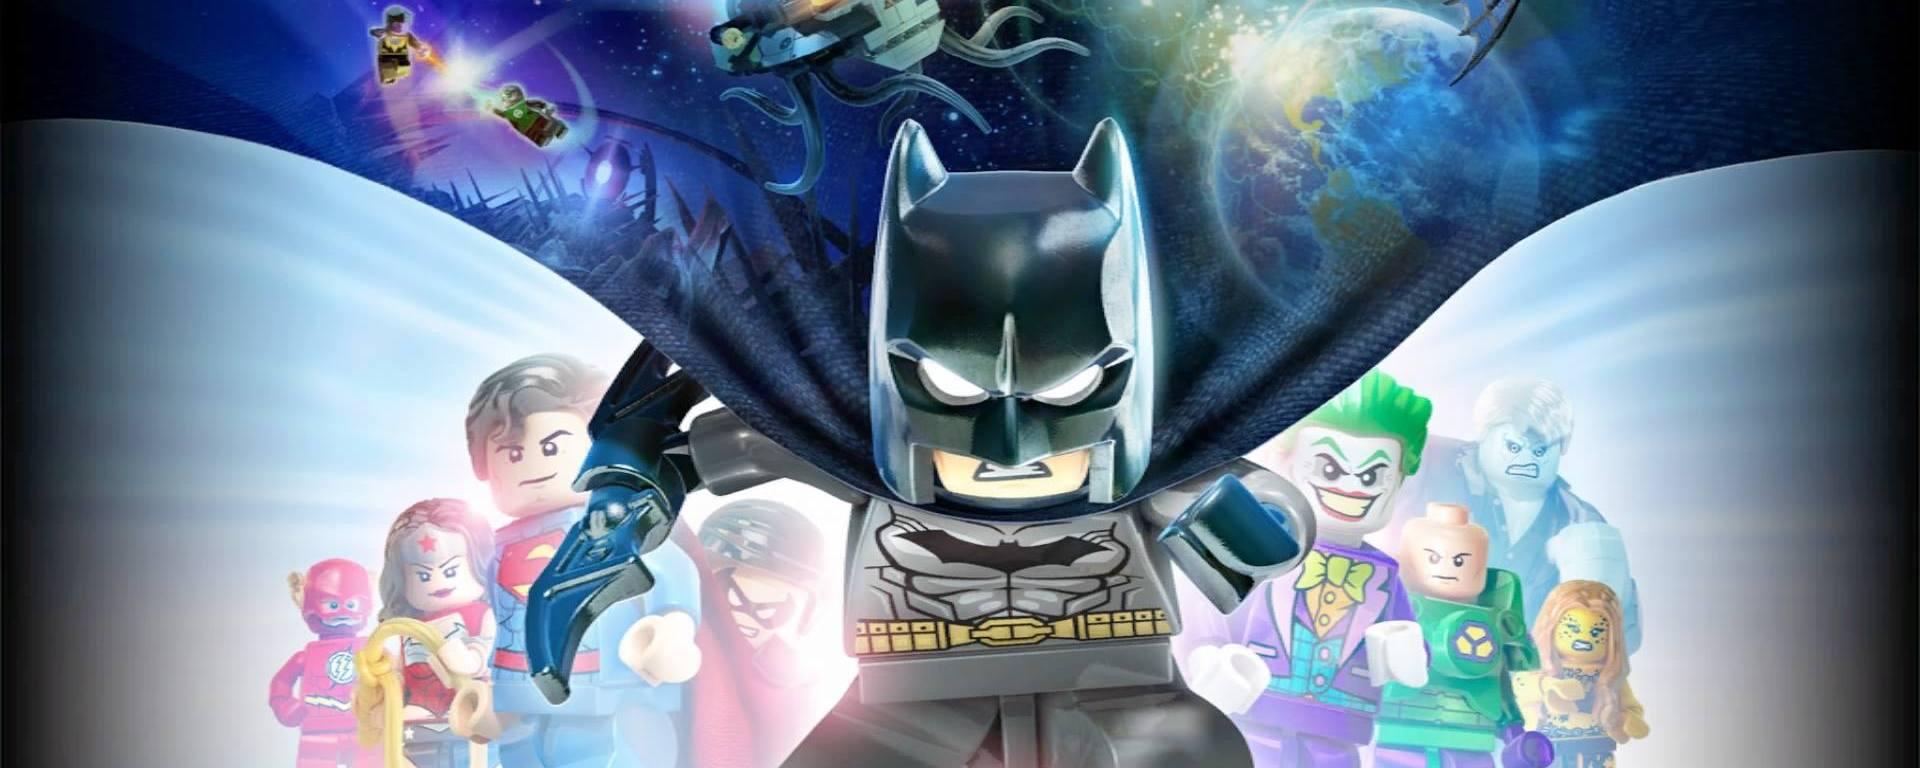 Can I Platinum this?: Lego Batman 3: Beyond Gotham PS4